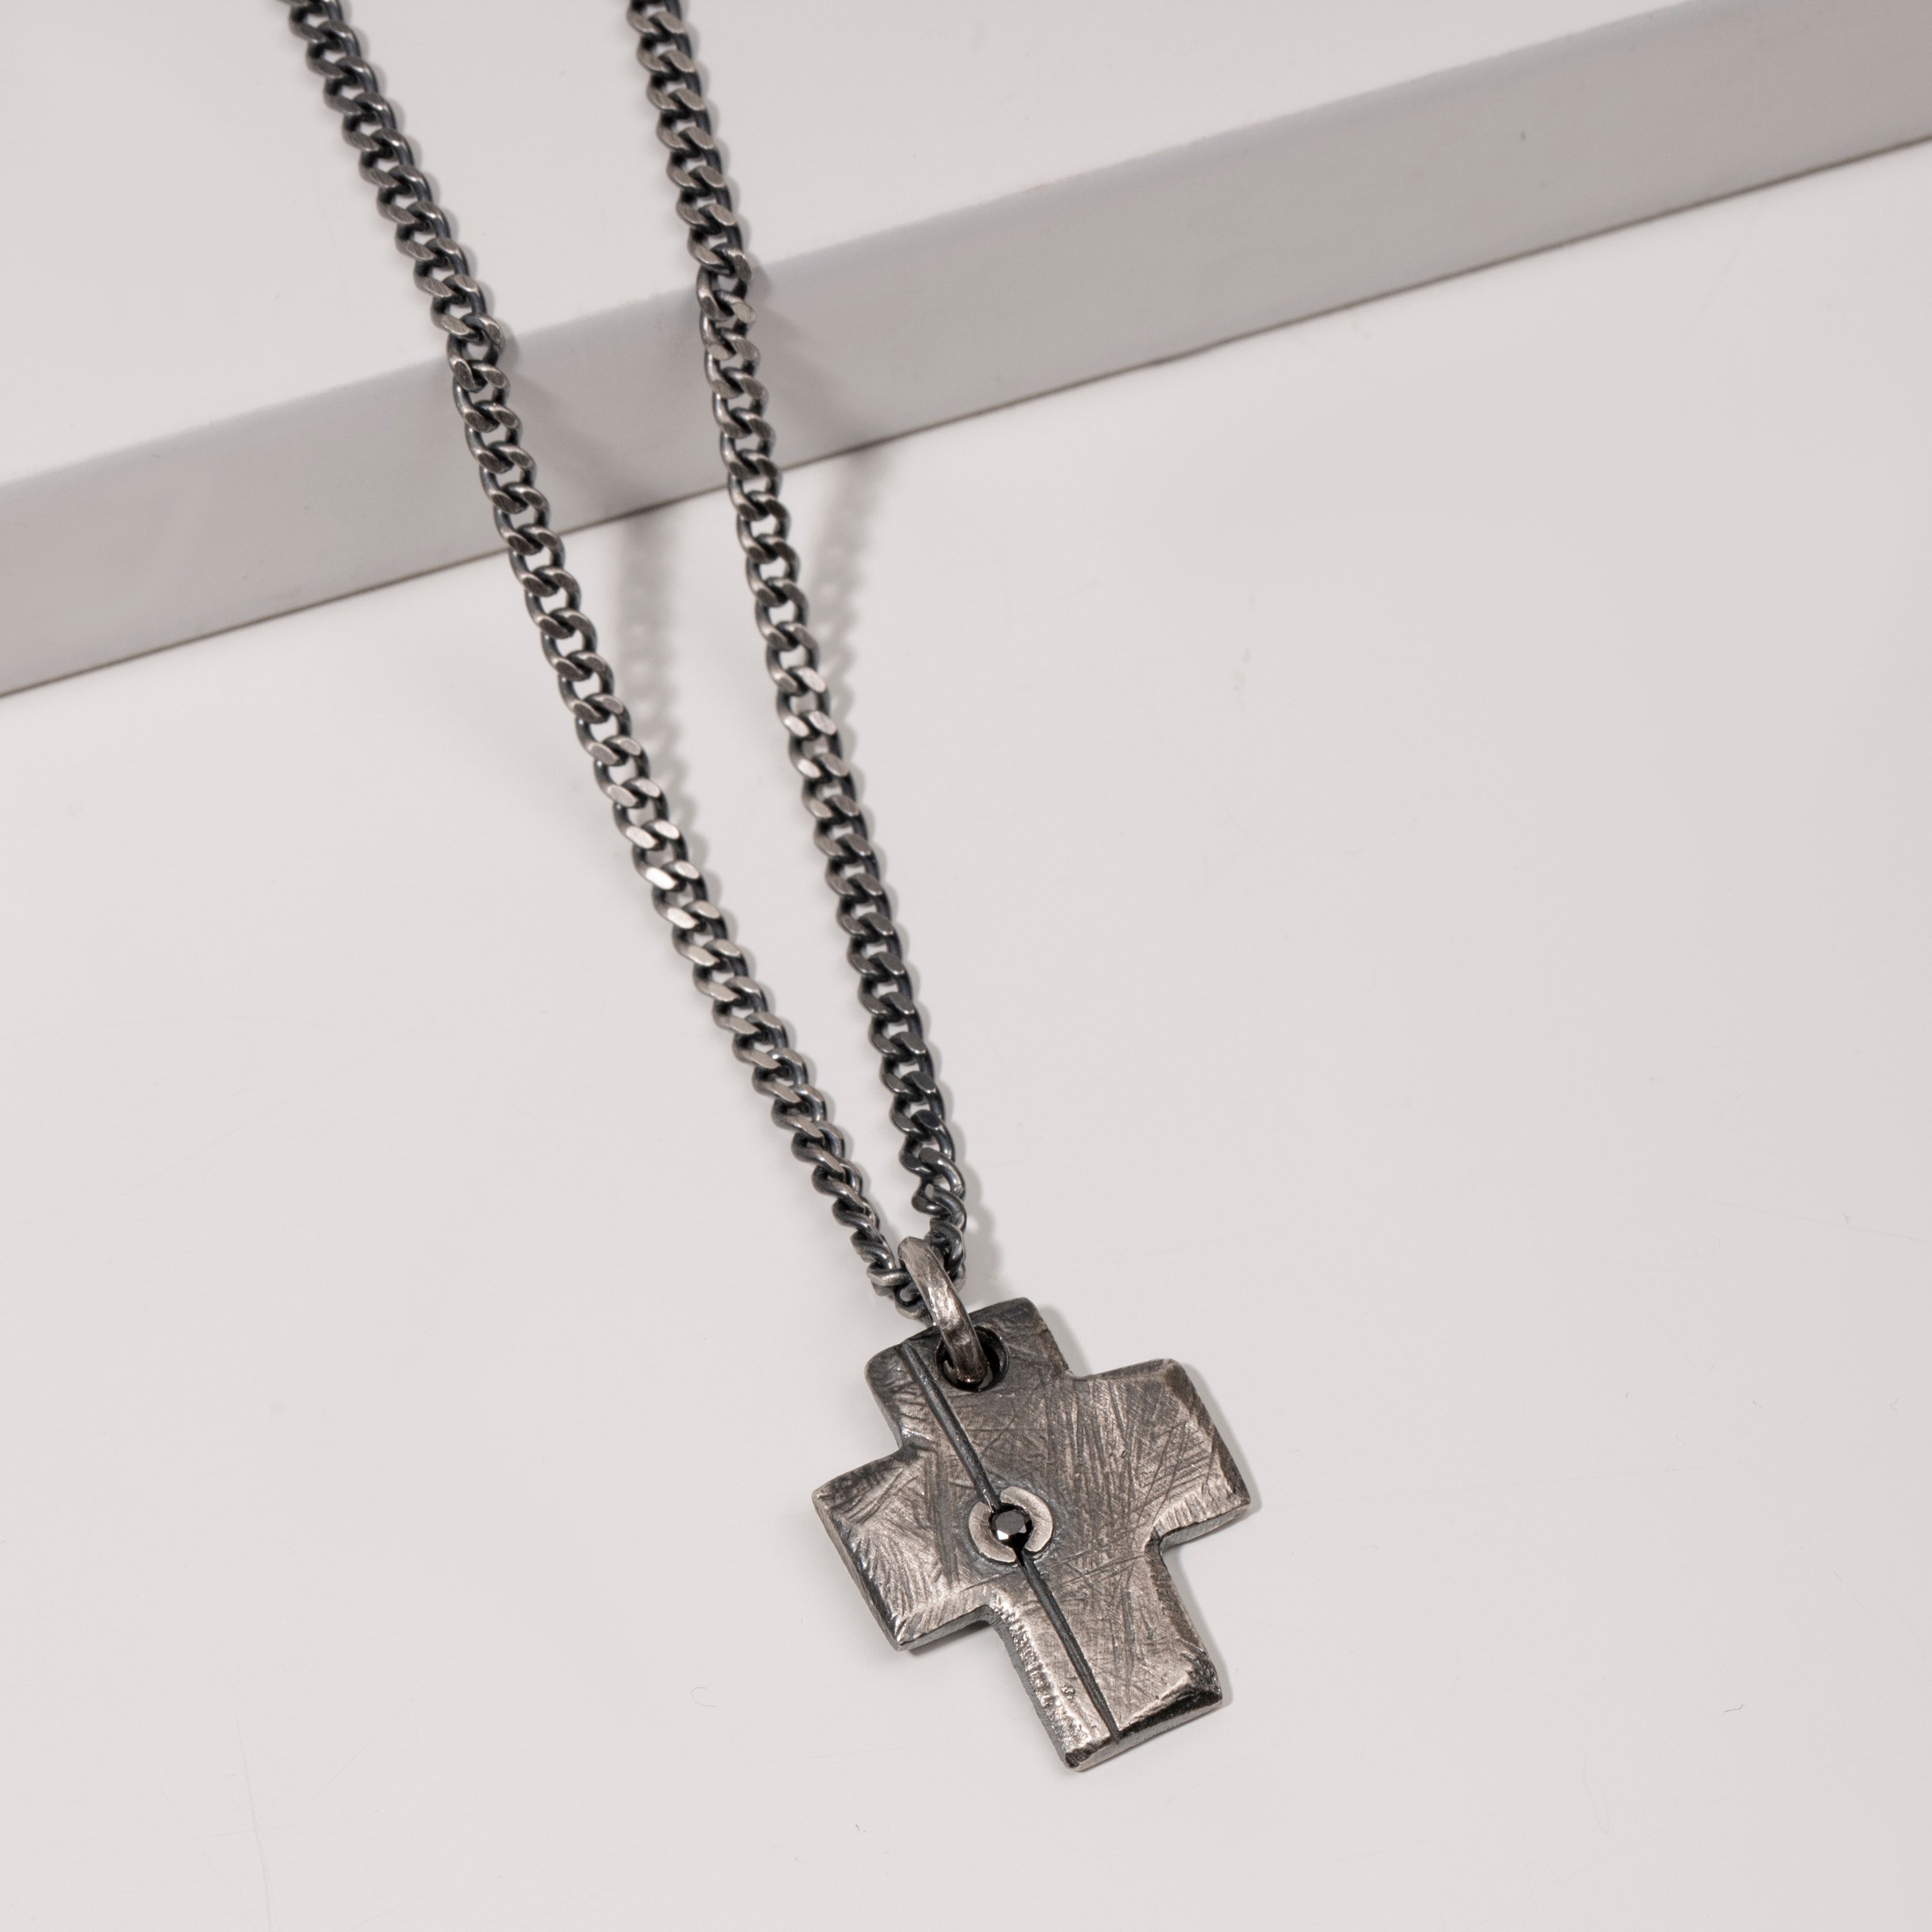 Cross Necklace Black Diamond Oxidized Silver 925